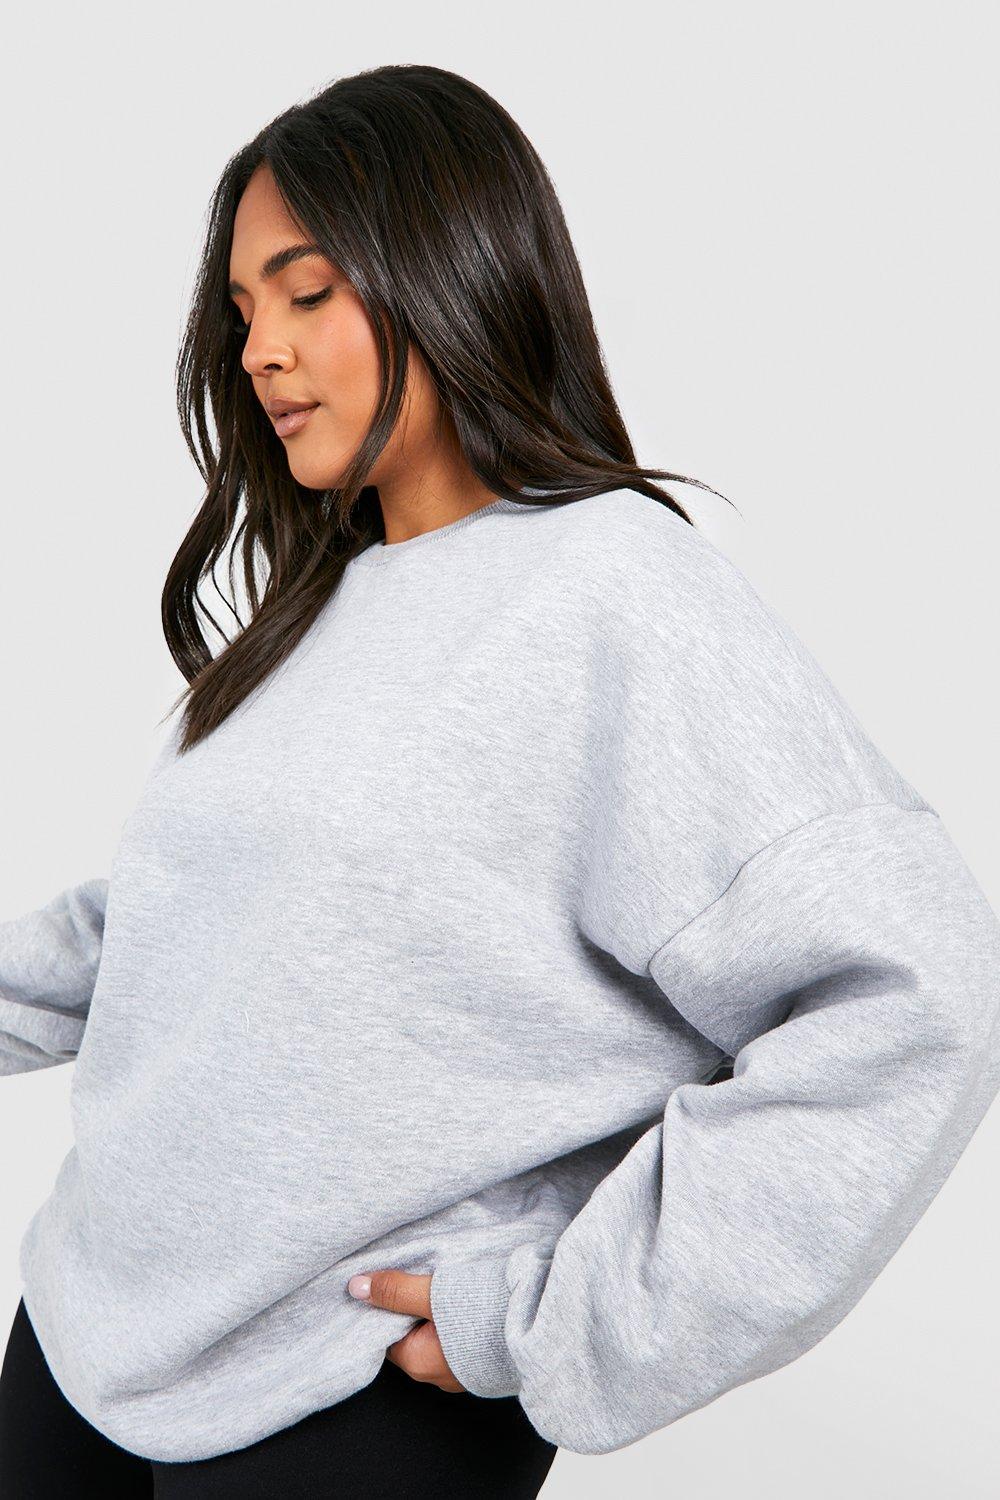 PMUYBHF Womens Plus Size Sweatshirt Womens Casual Loose Fitting